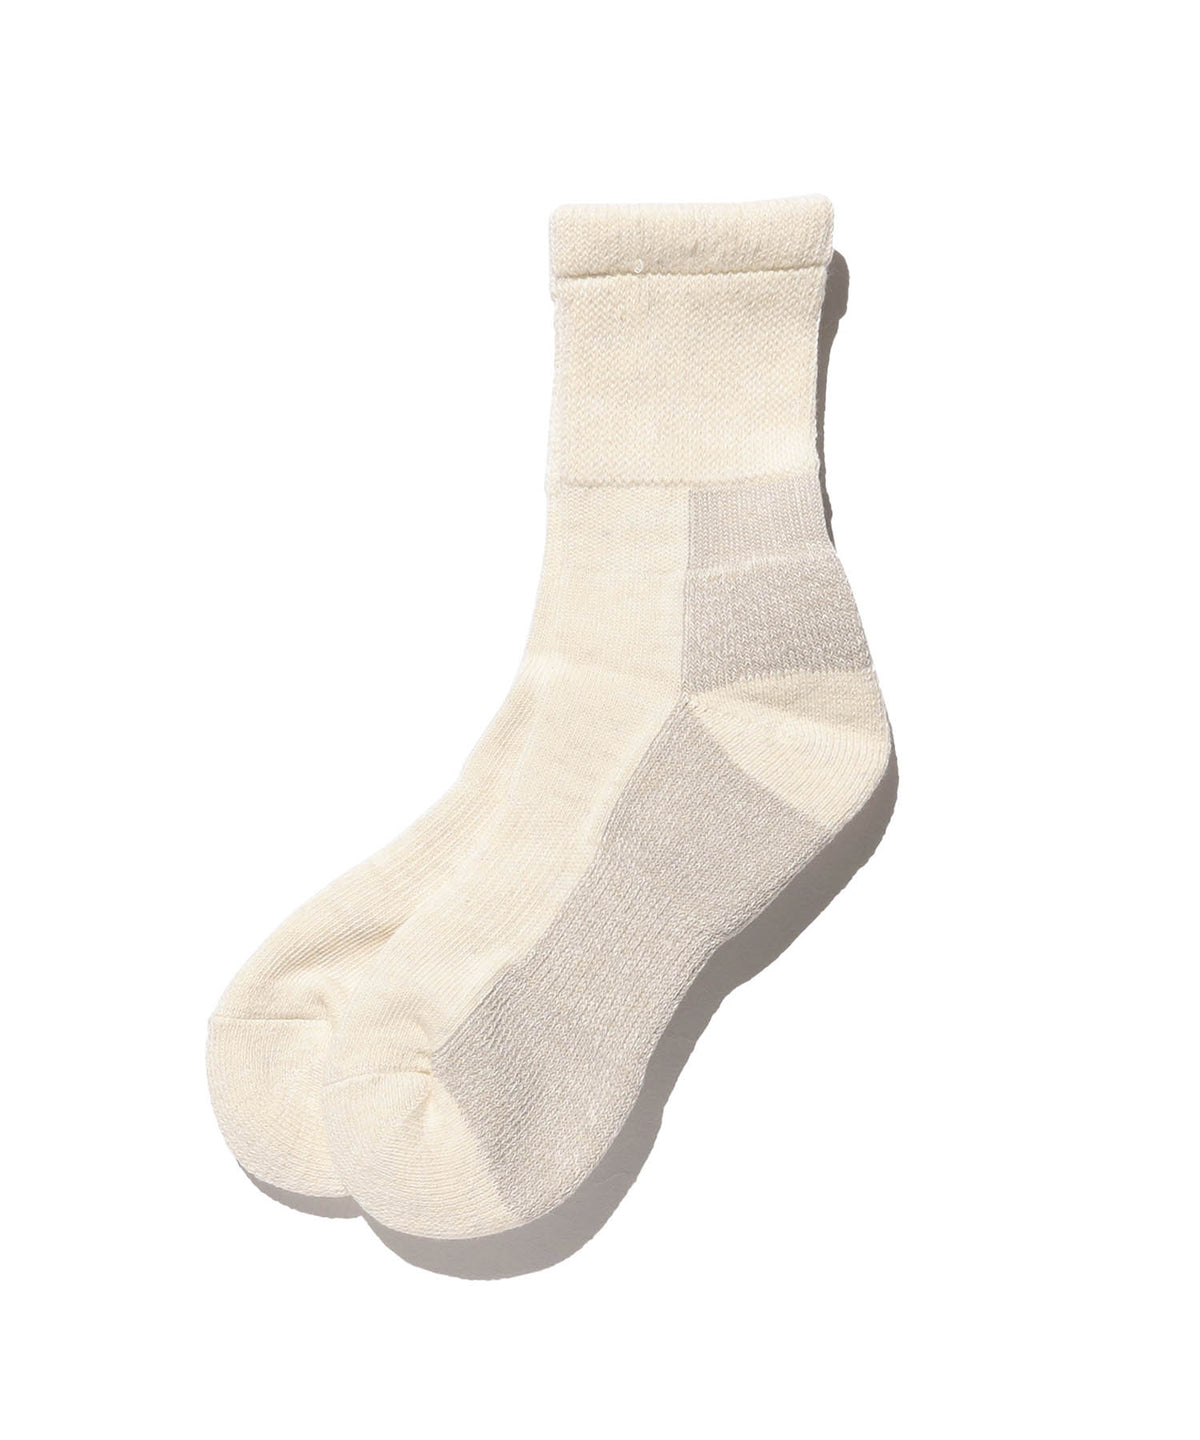 Outdoor Socks in Off-White